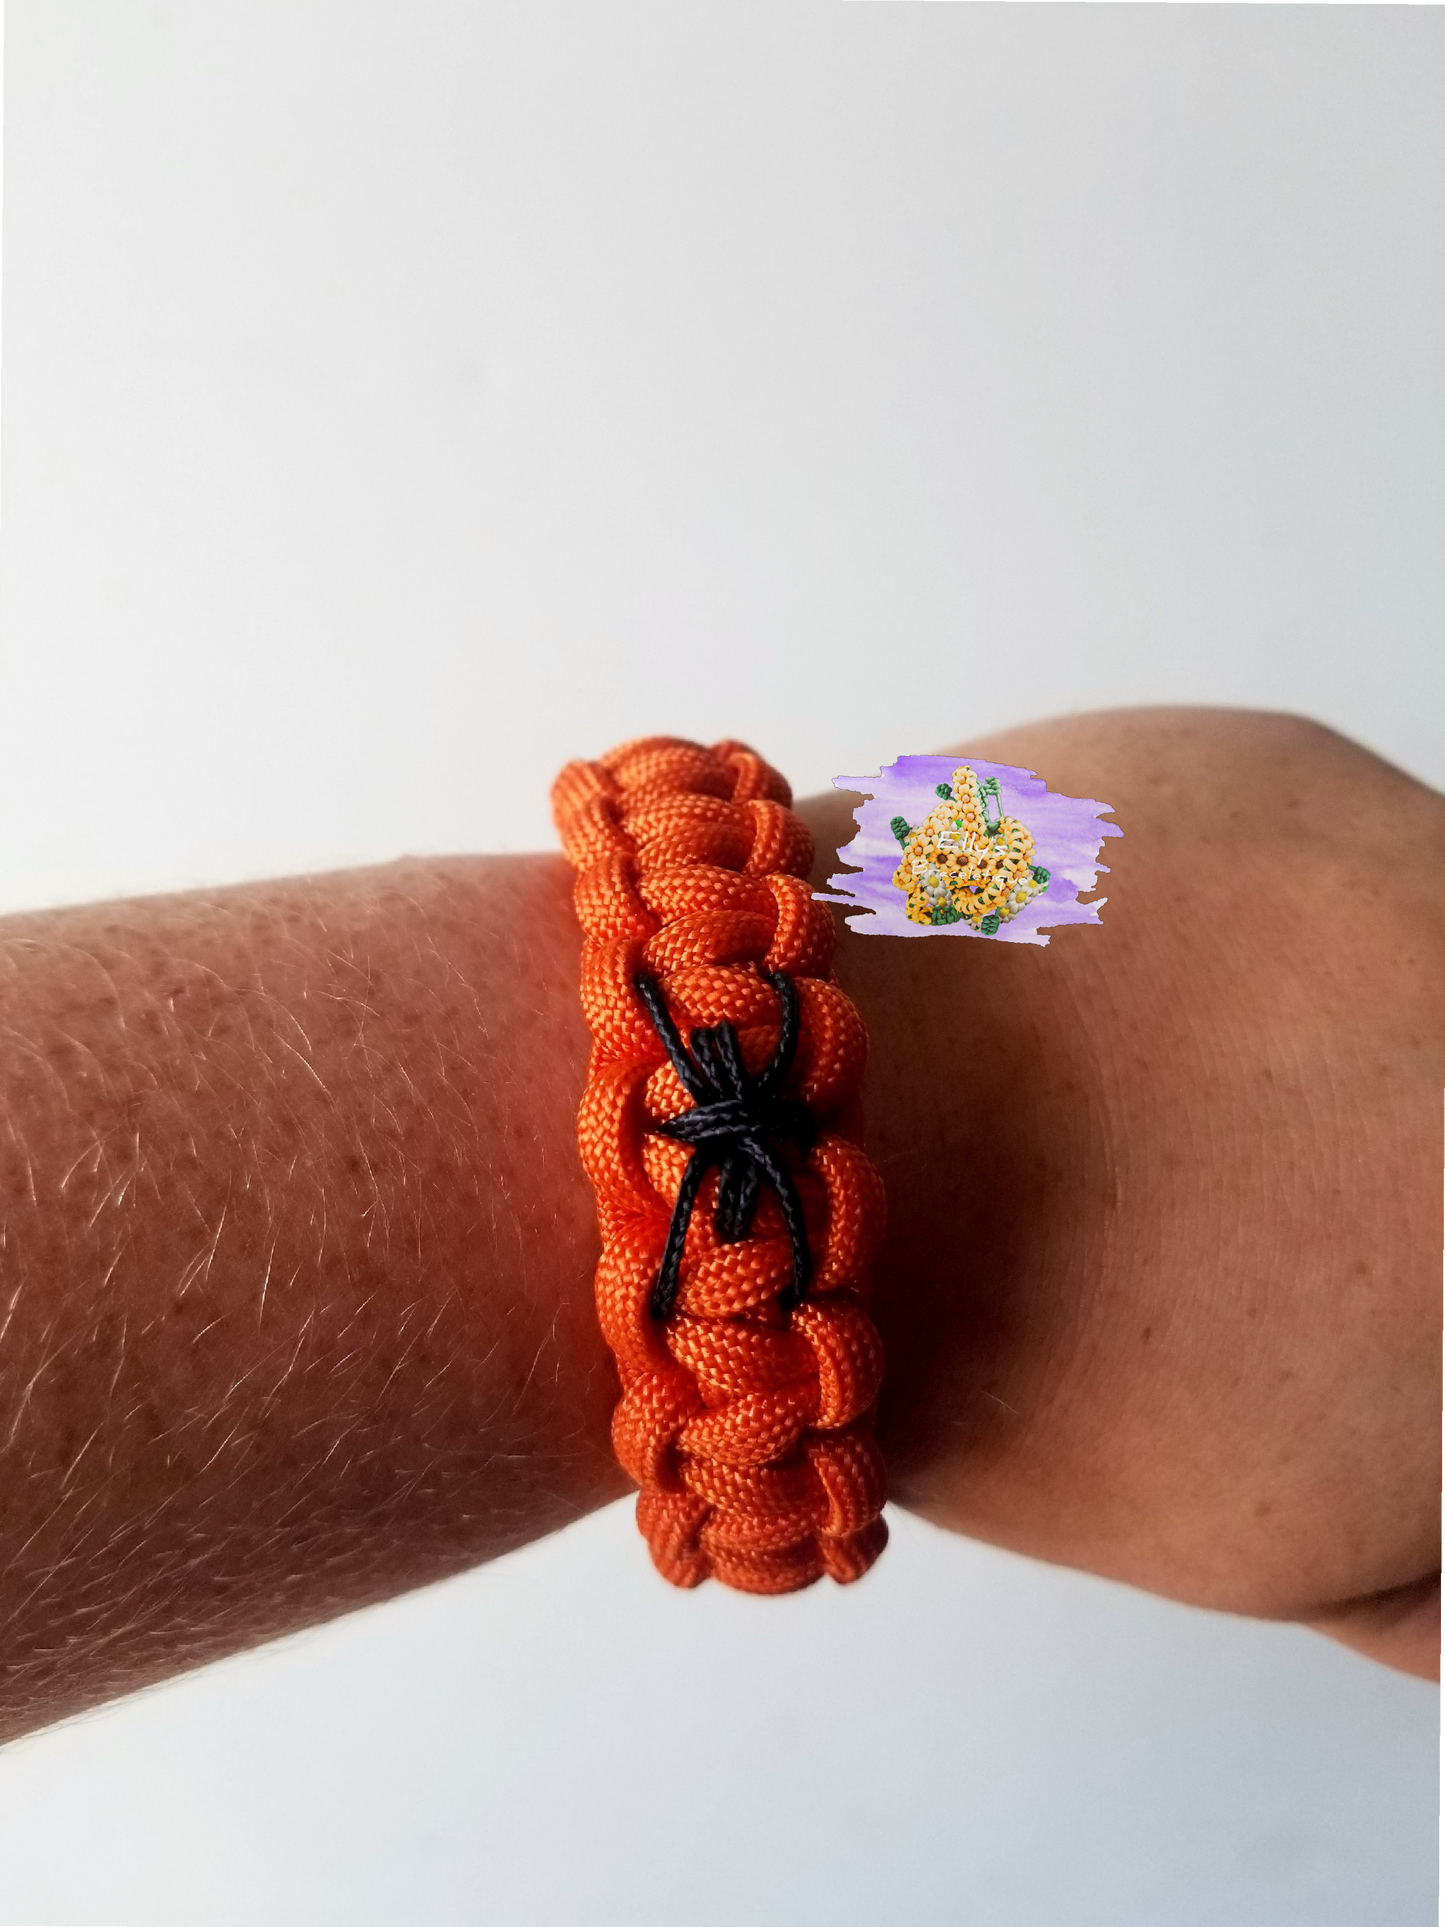 Paracord spider bracelet